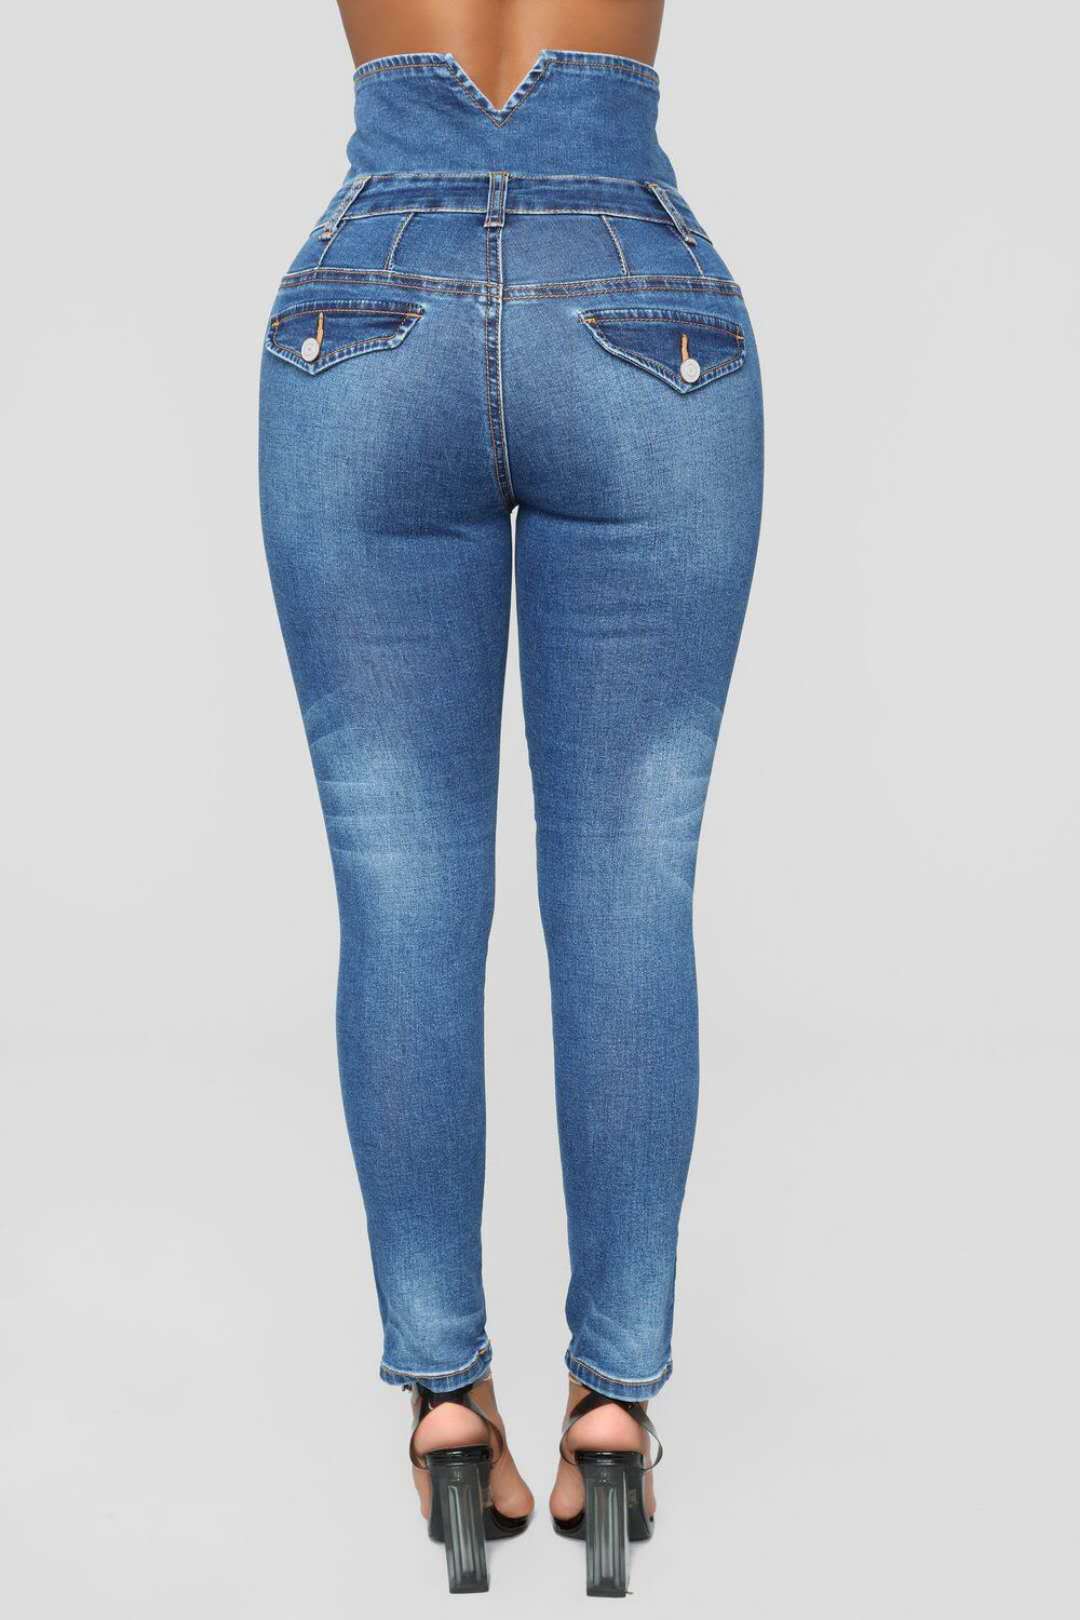 Women High Waist Pencil Denim Skinny Elastic Stretch Jeans - Club Trendz 